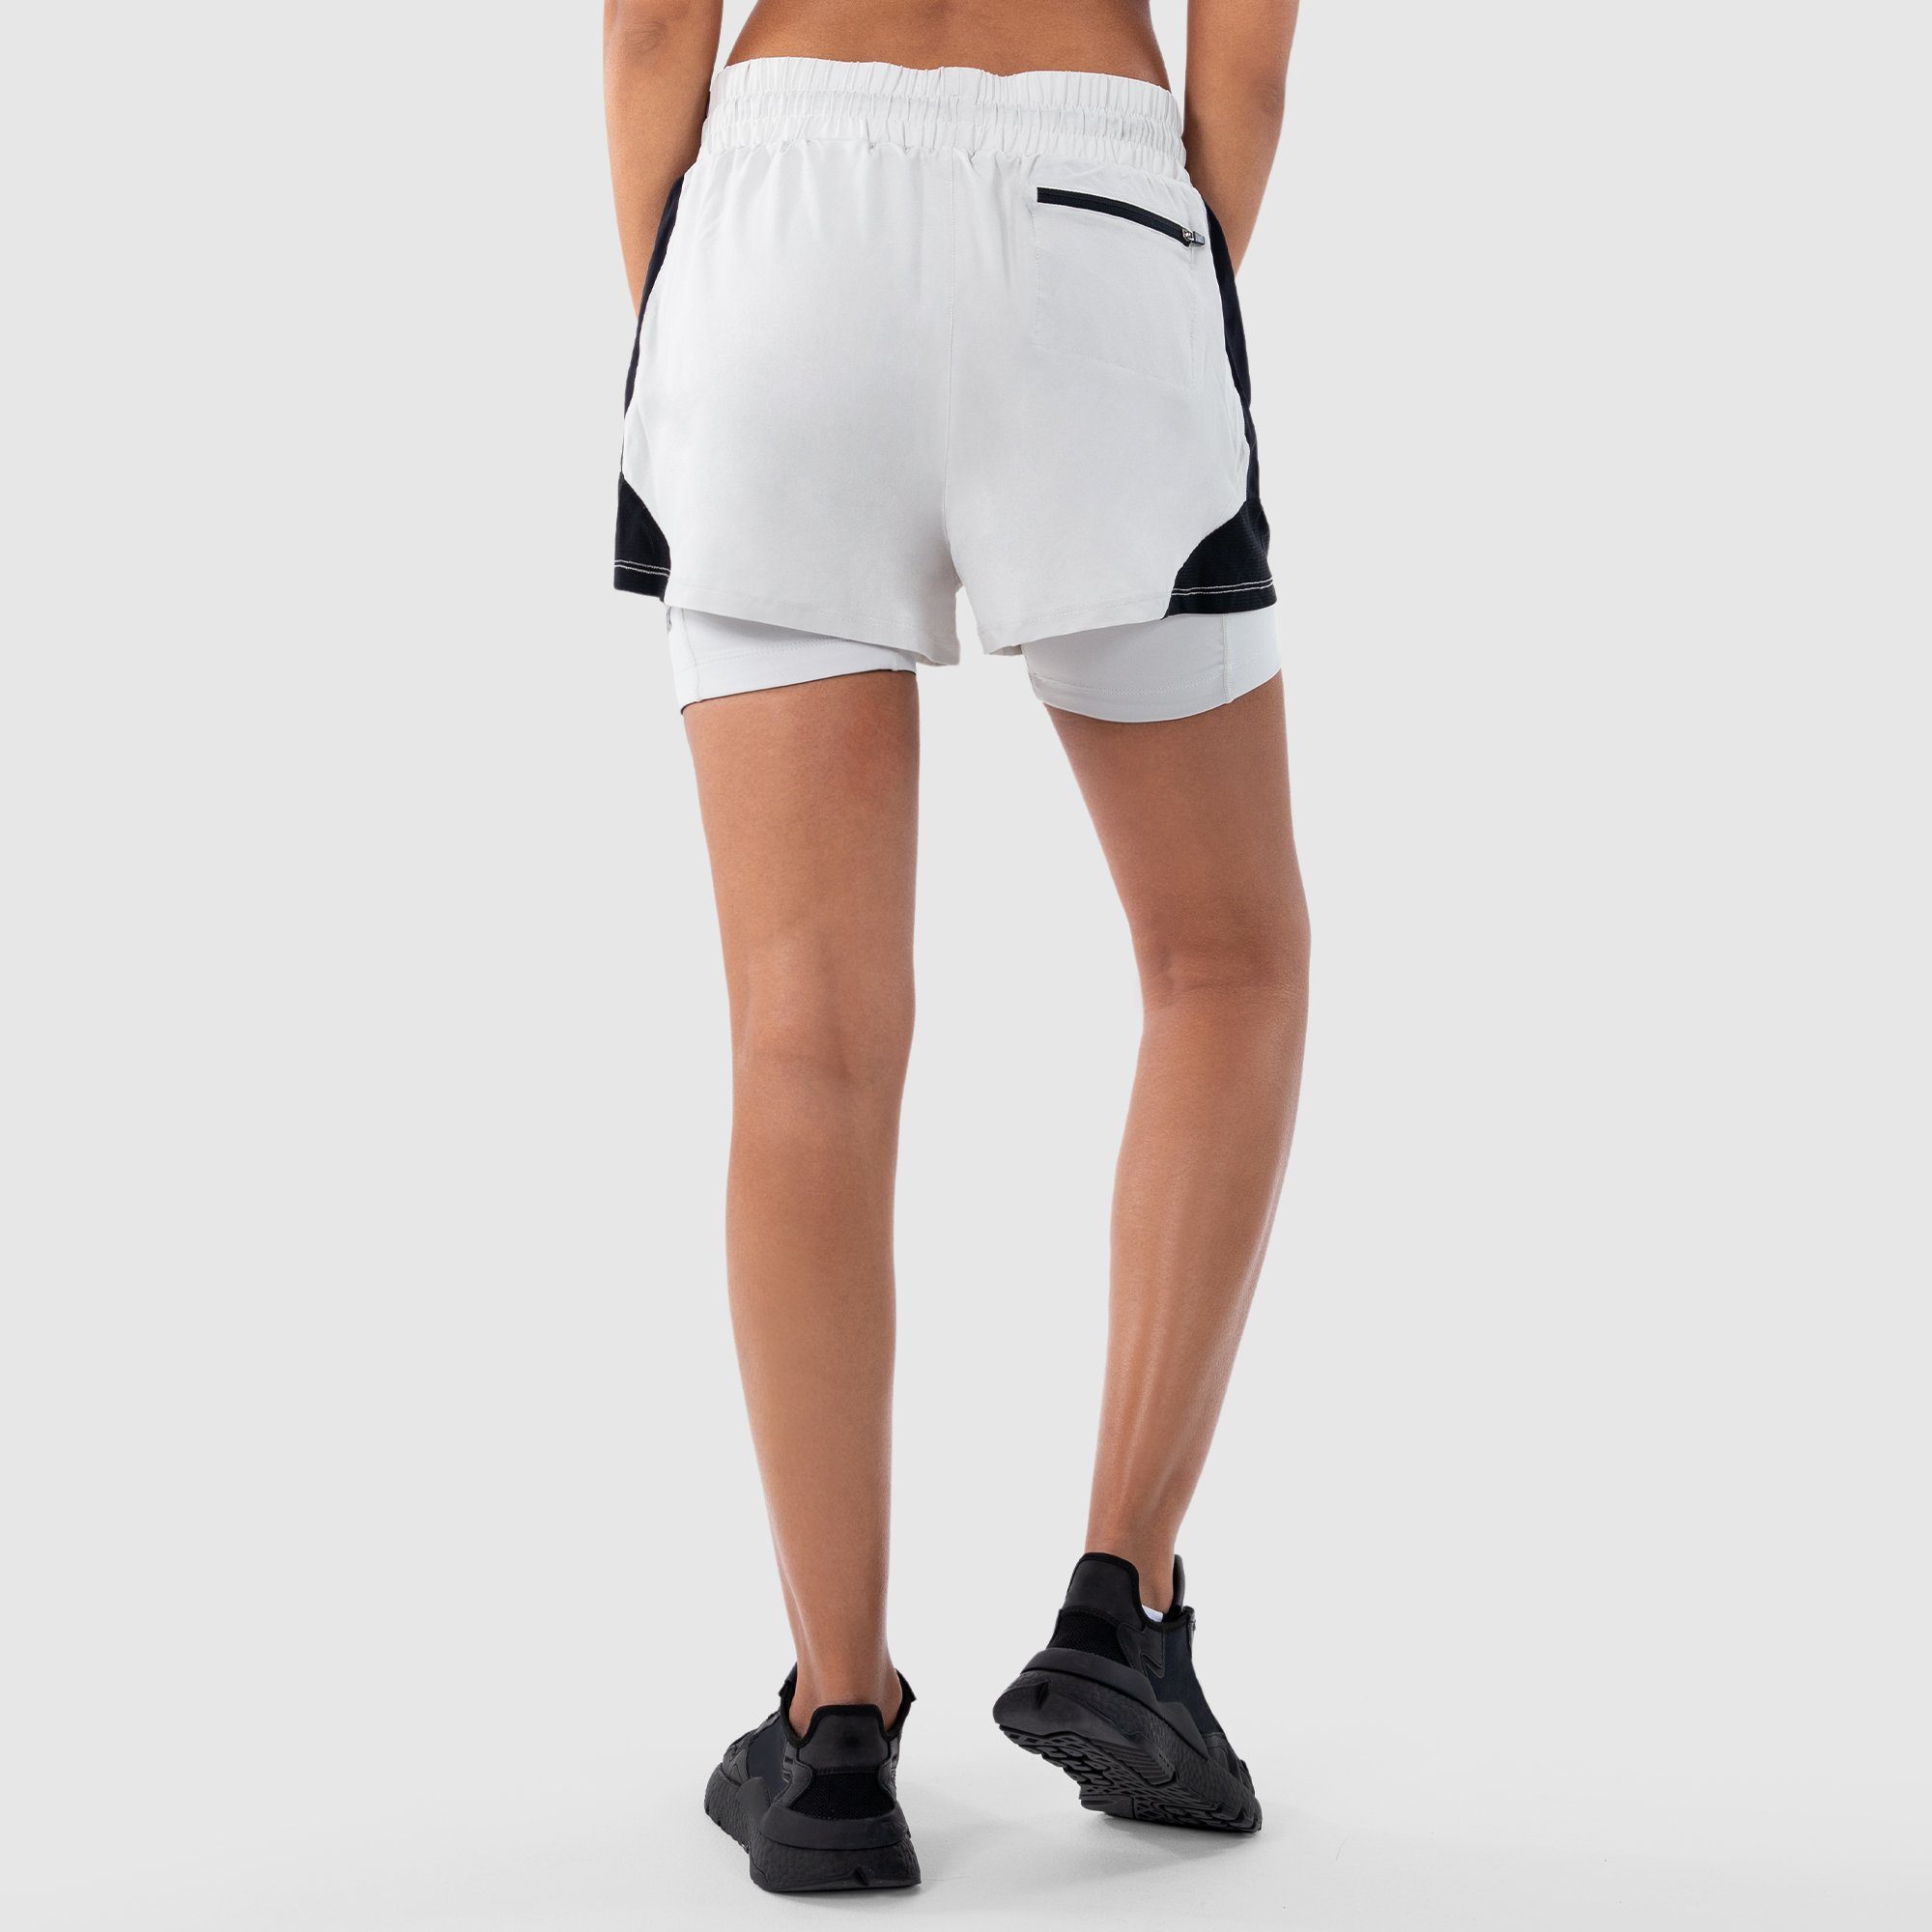 Maisie Grau Smilodox Shorts